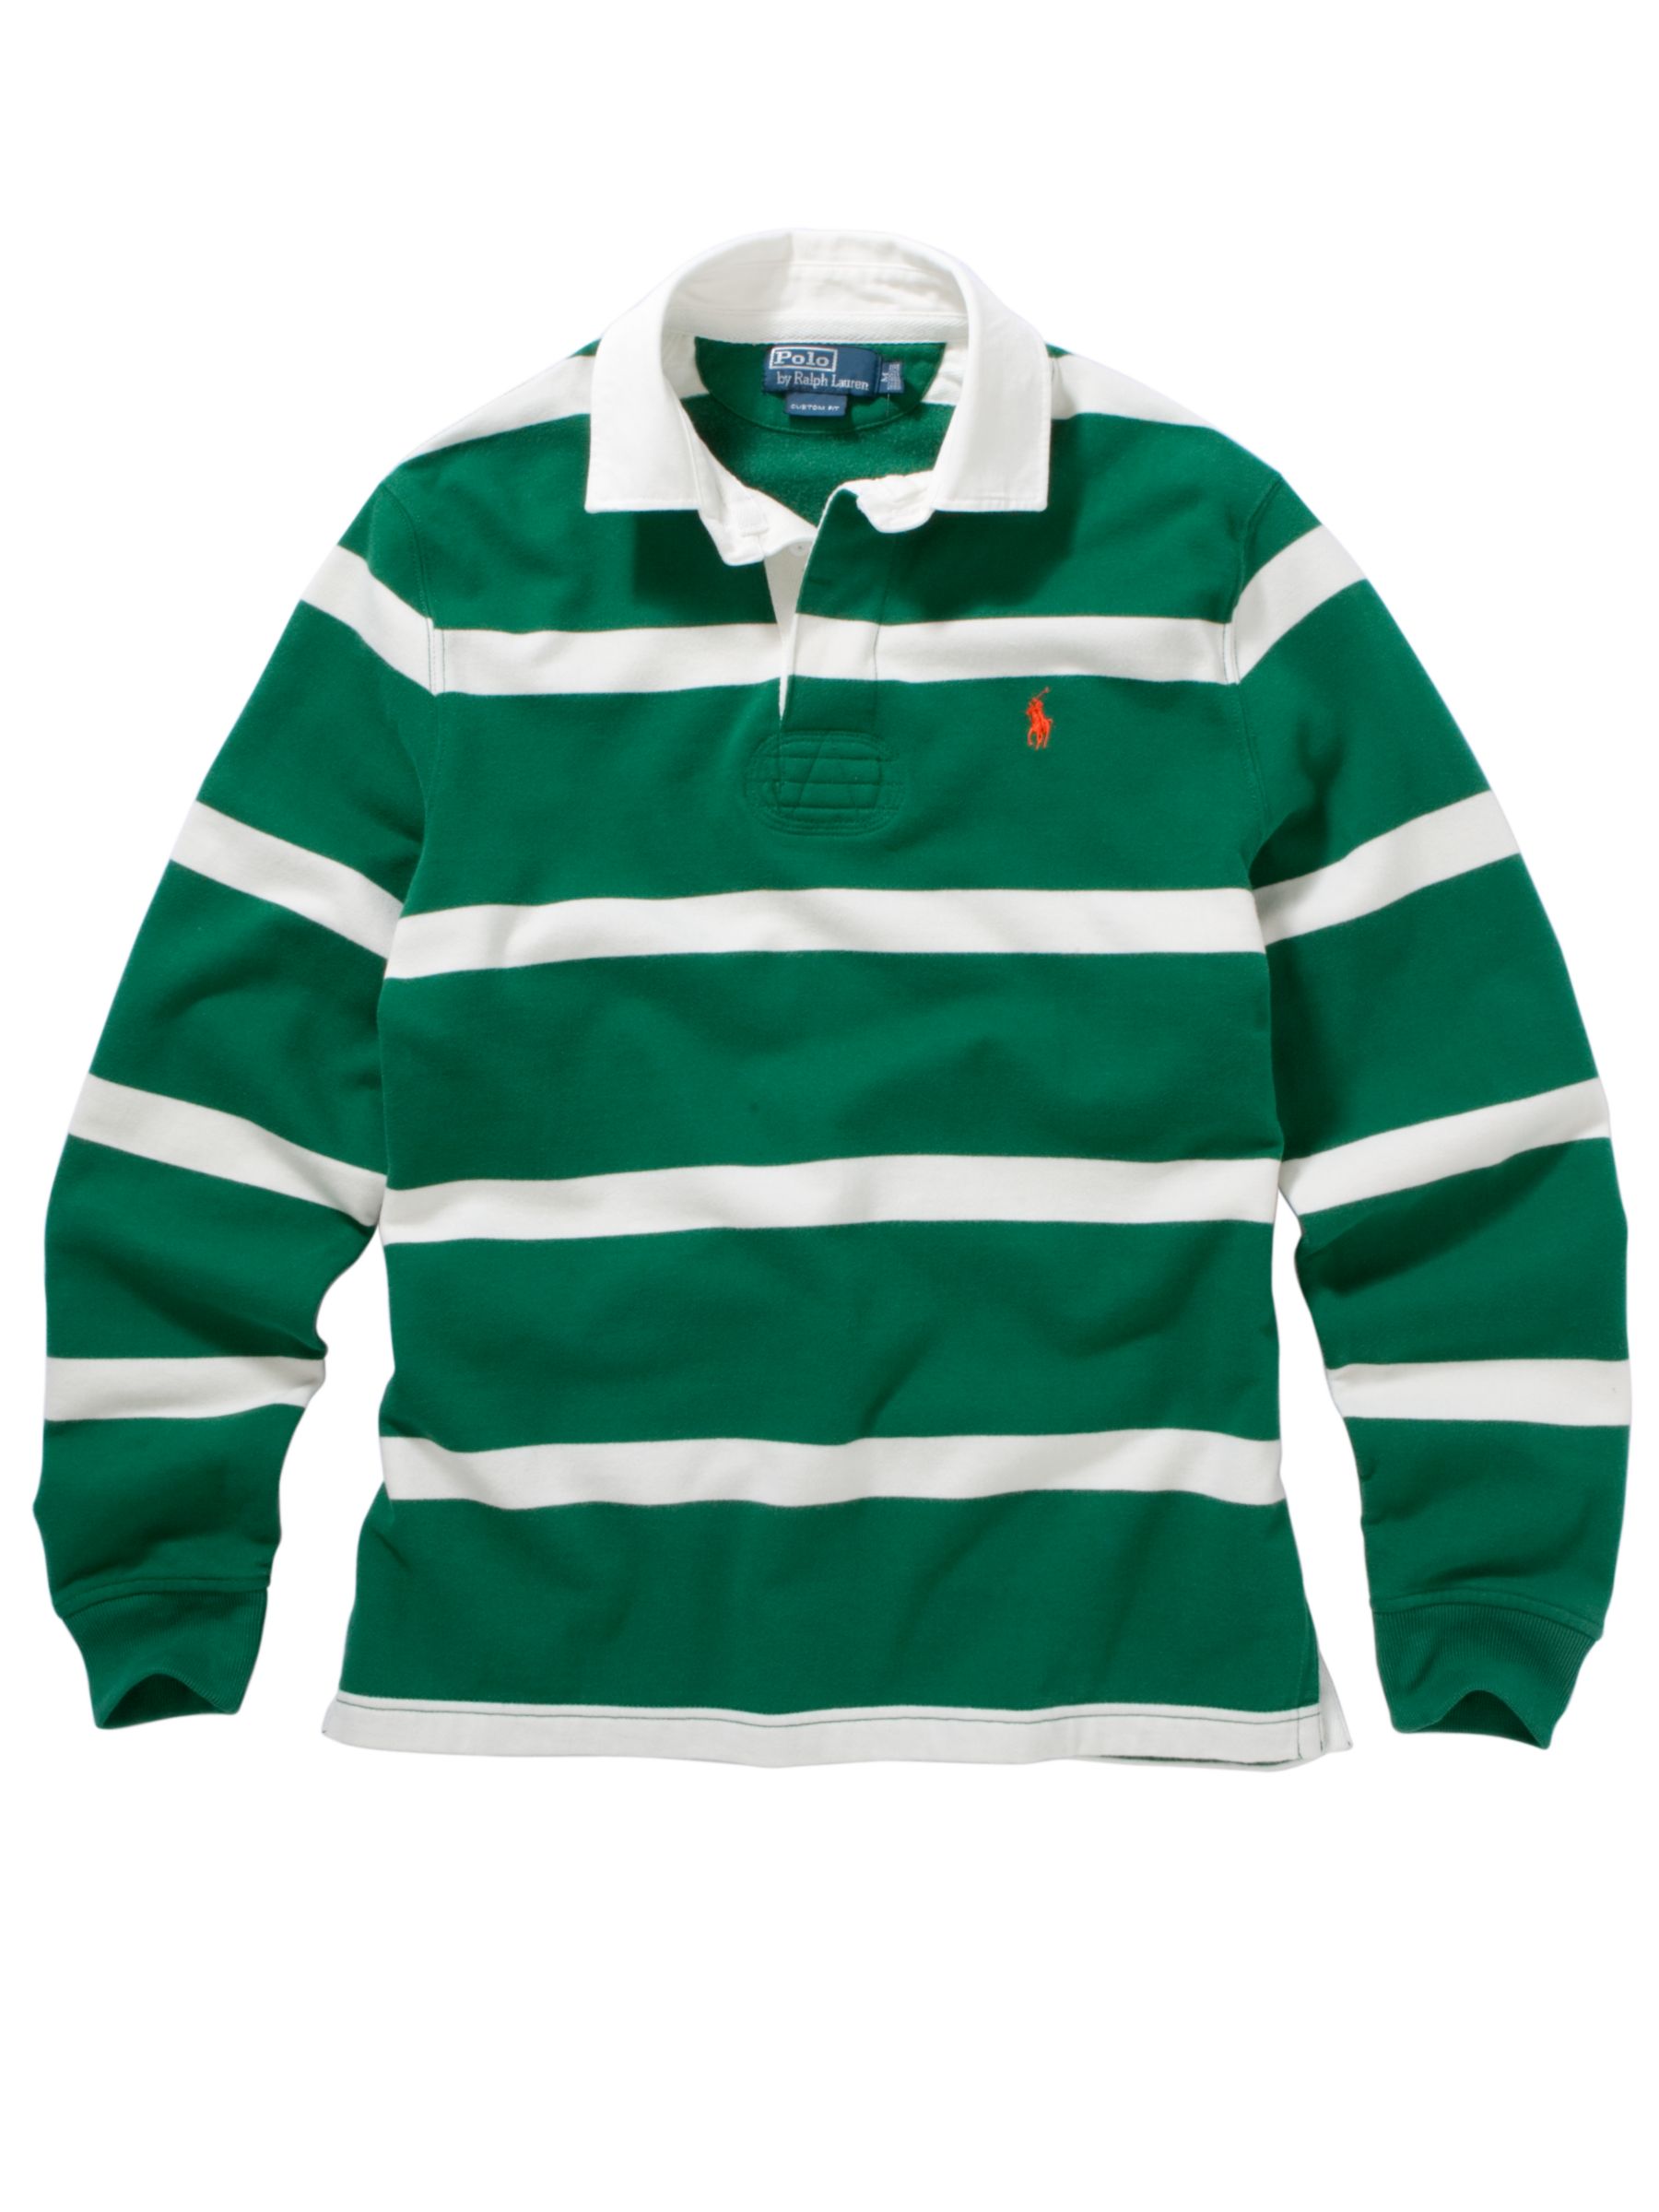 Ralph Lauren Polo Ralph Lauren Stripe Rugby Shirt, Green/White